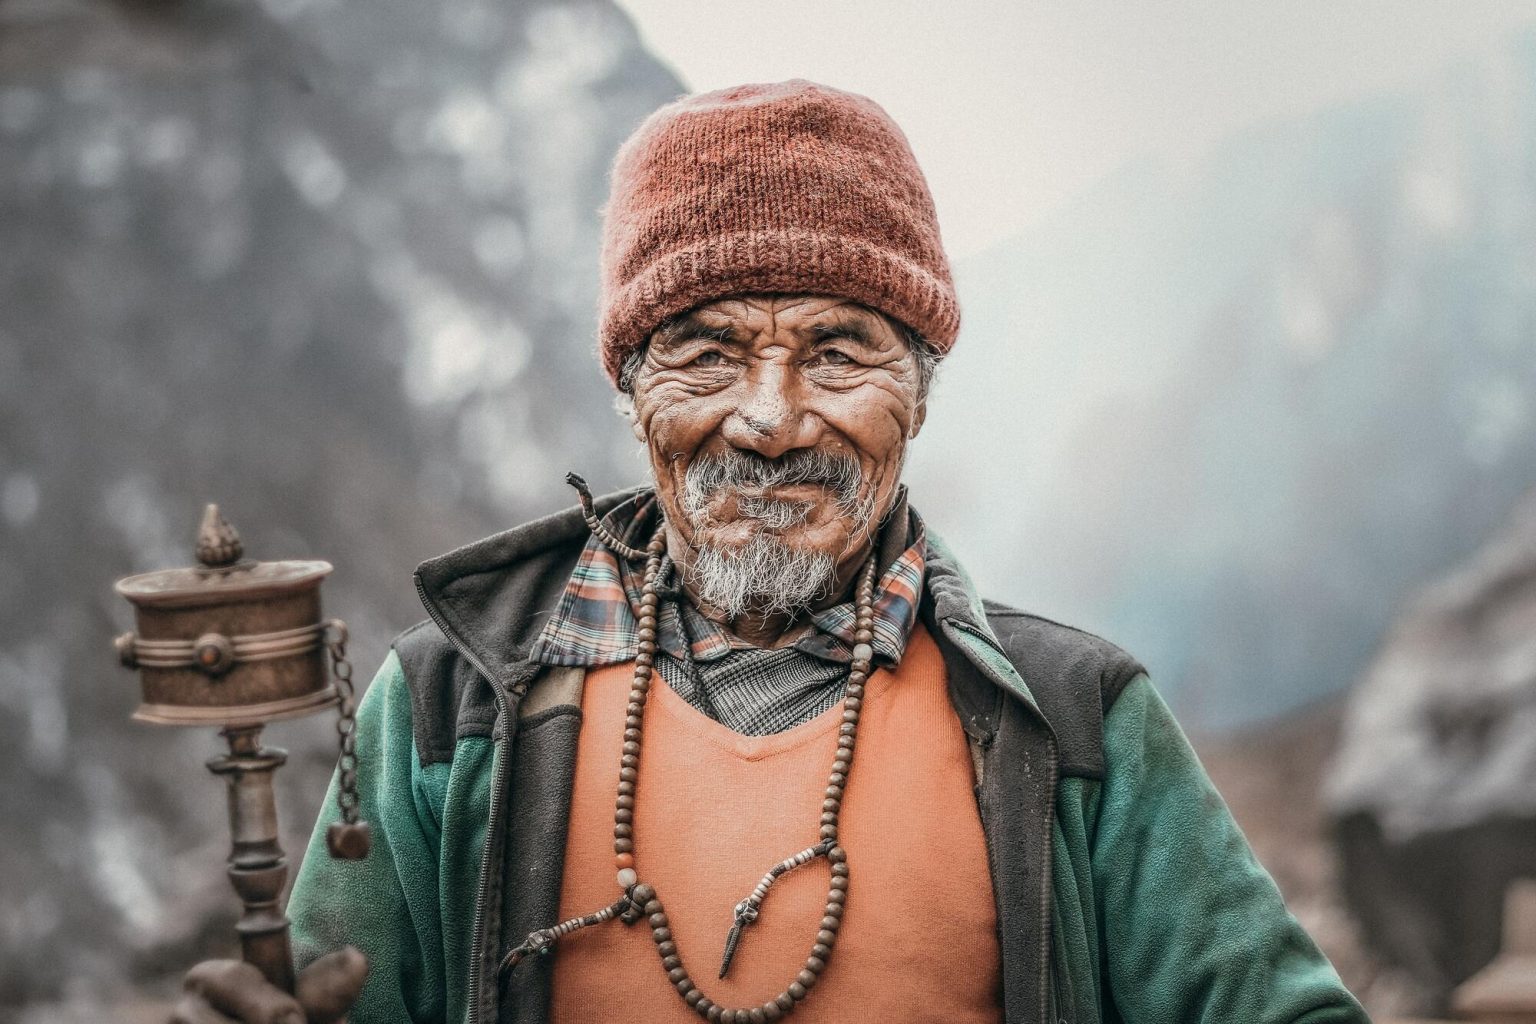 Langtang, Nepal - By Mountain People